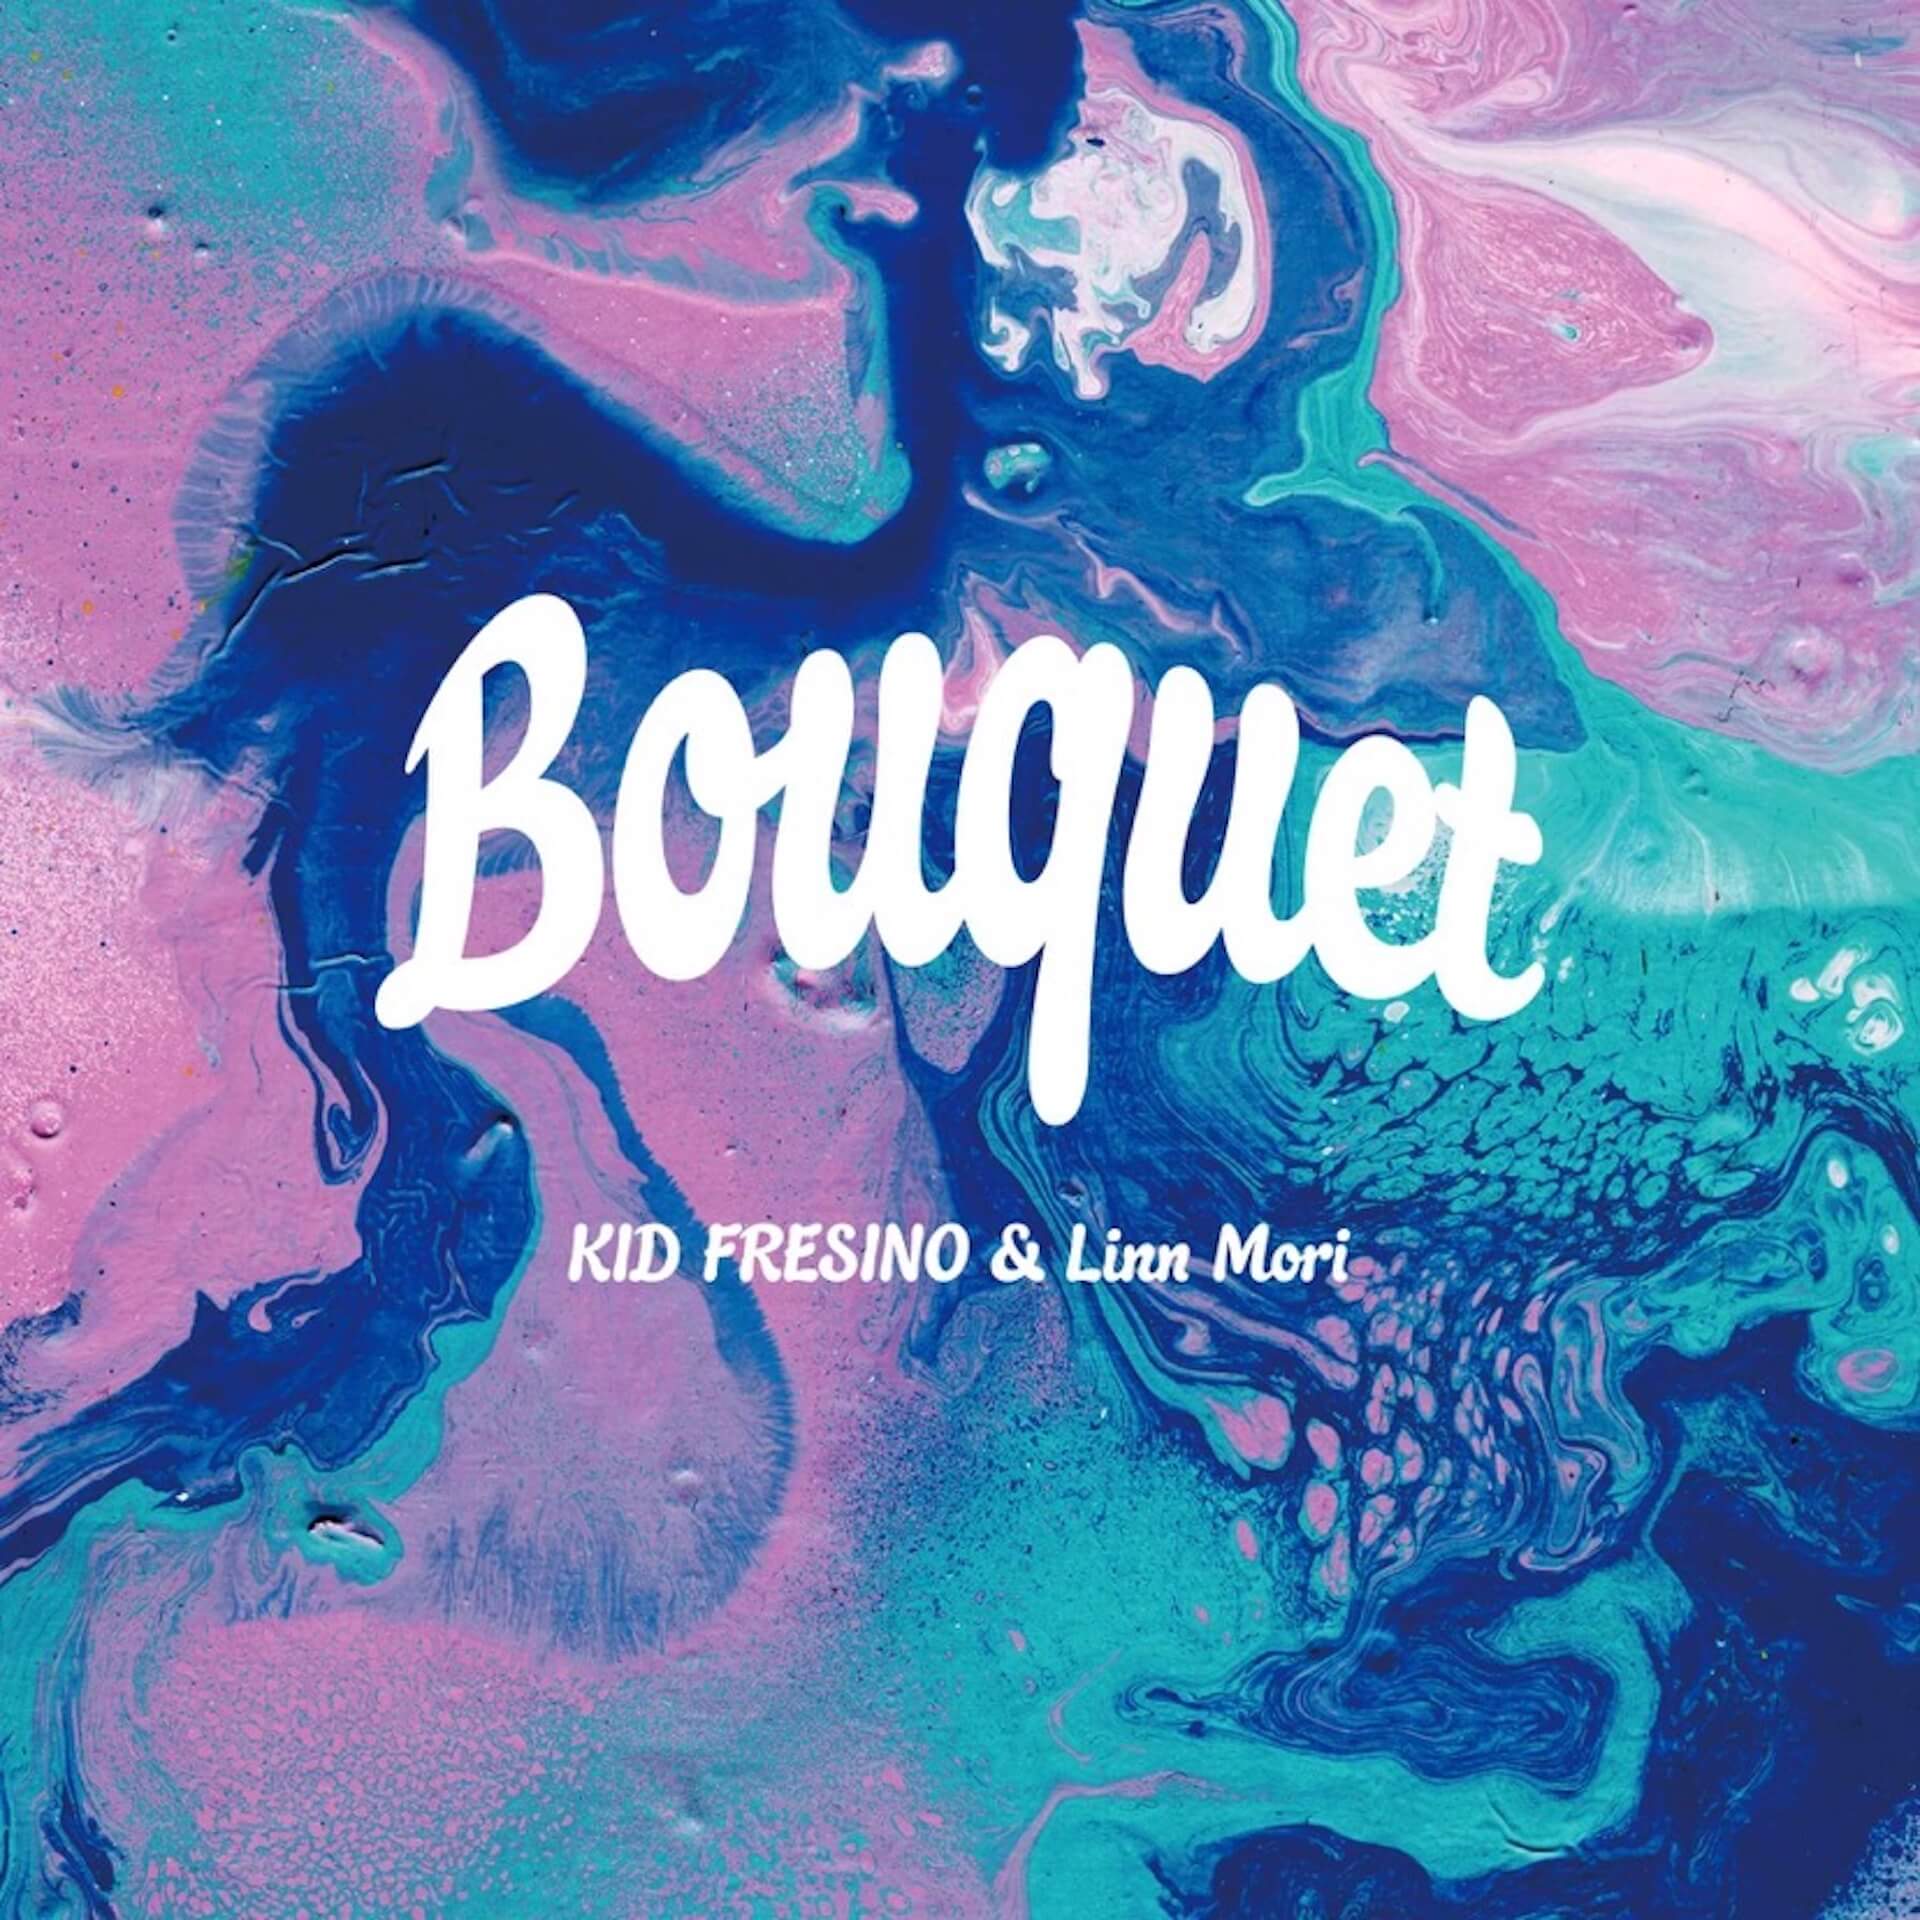 KID FRESINOとLinn Moriによる幻のコラボシングル「Bouquet」がリマスターを経て配信リリース kidfresino-linnmori